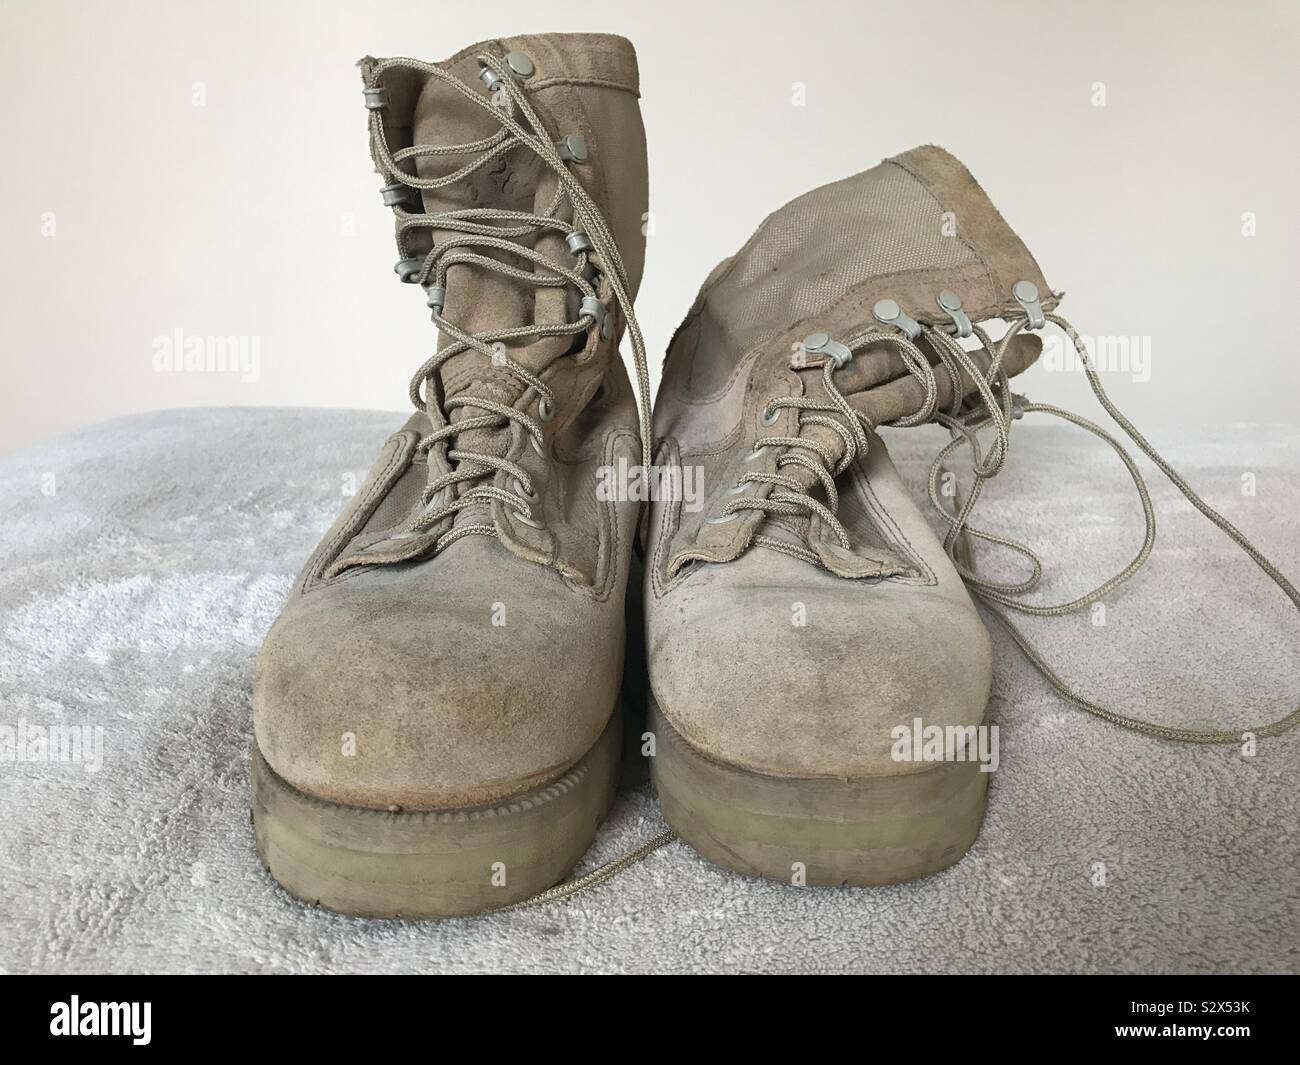 Army desert boots Stock Photo - Alamy